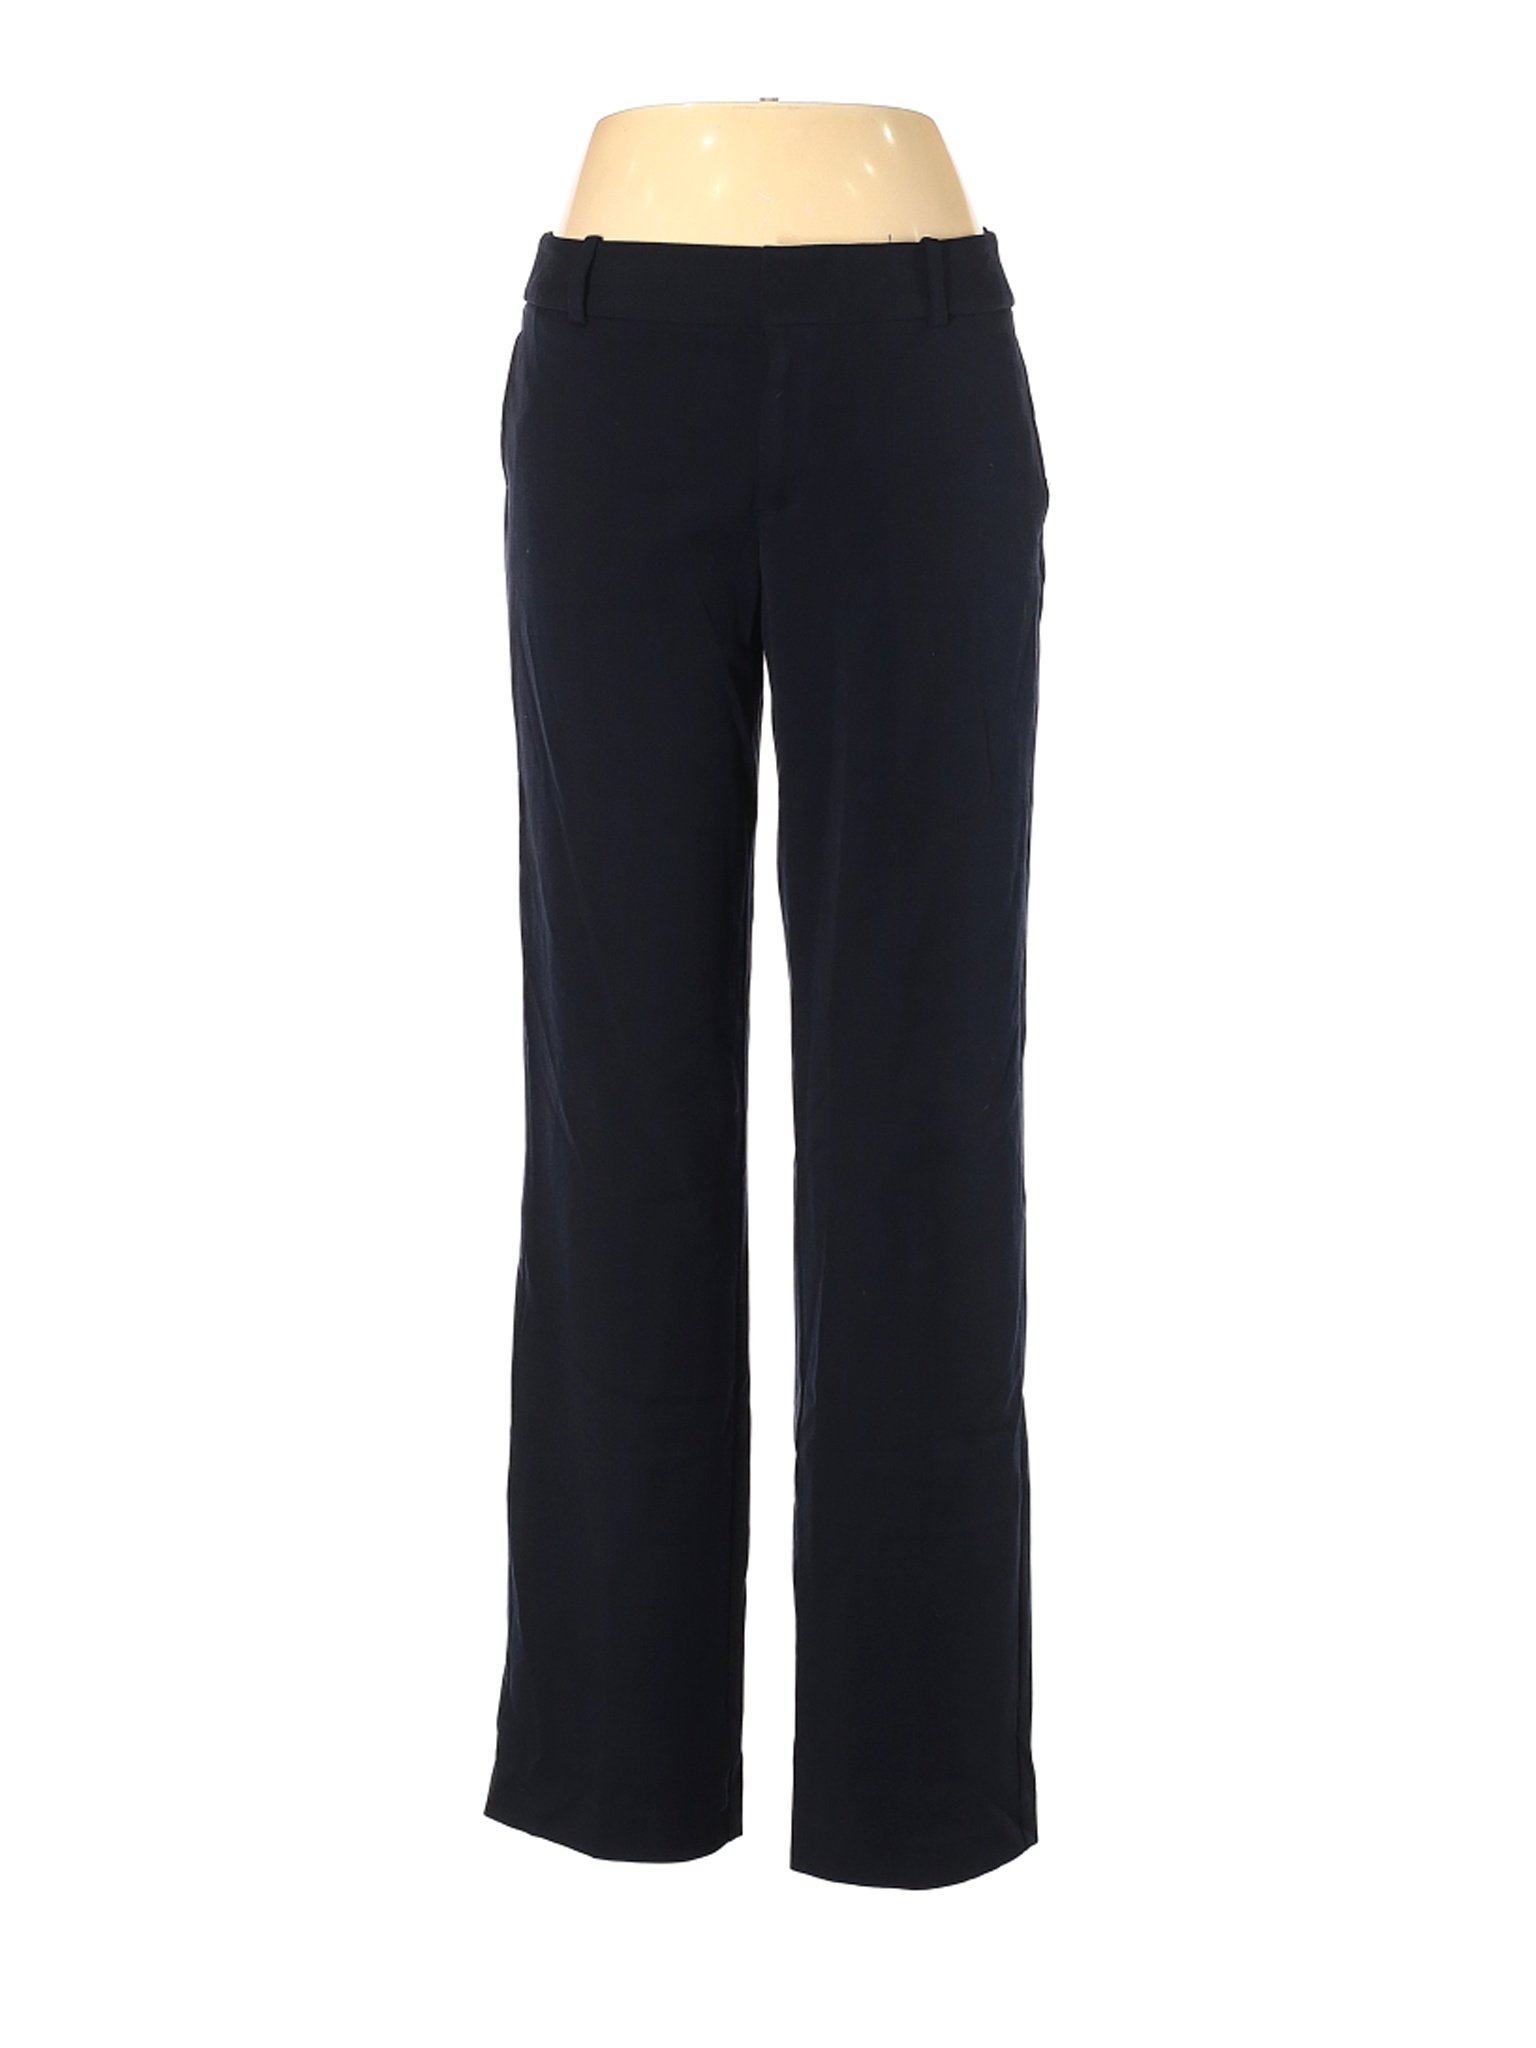 Merona Women Black Dress Pants 10 | eBay